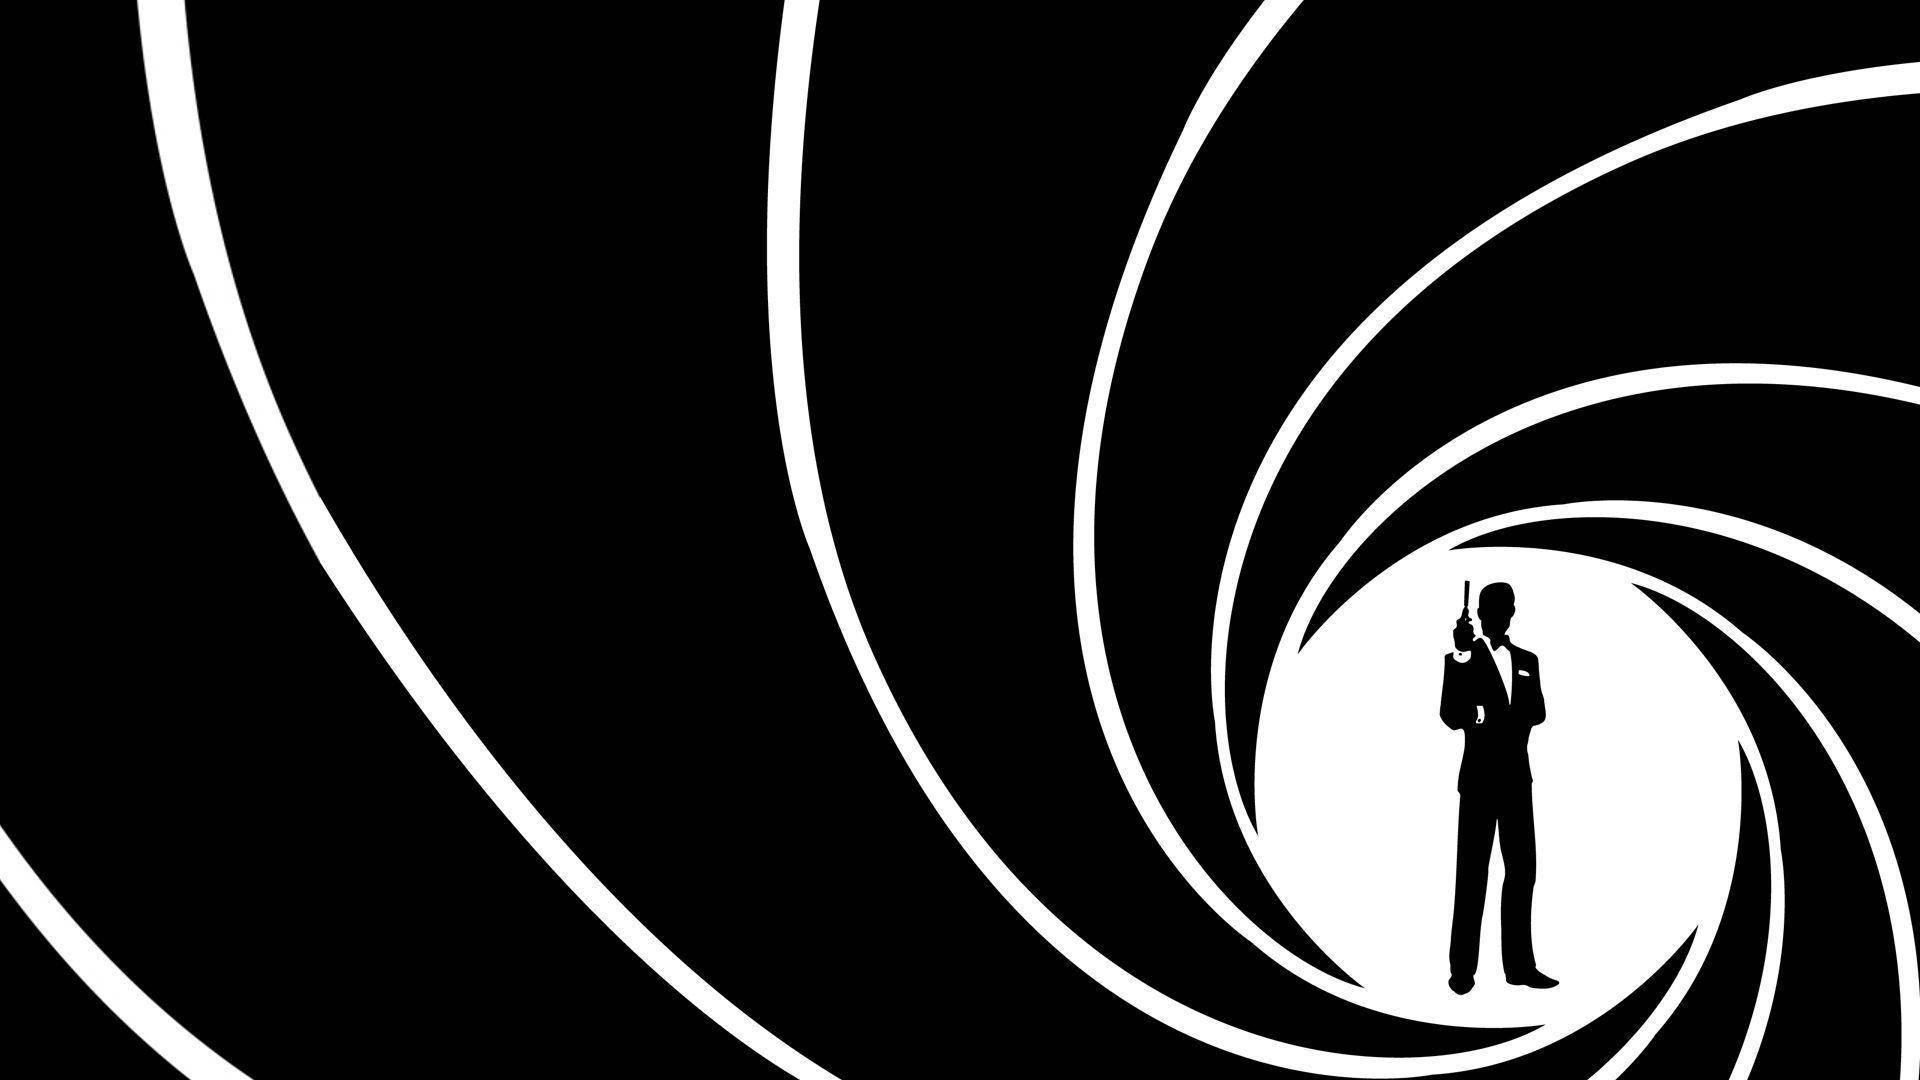 James Bond Black And White Silhouette